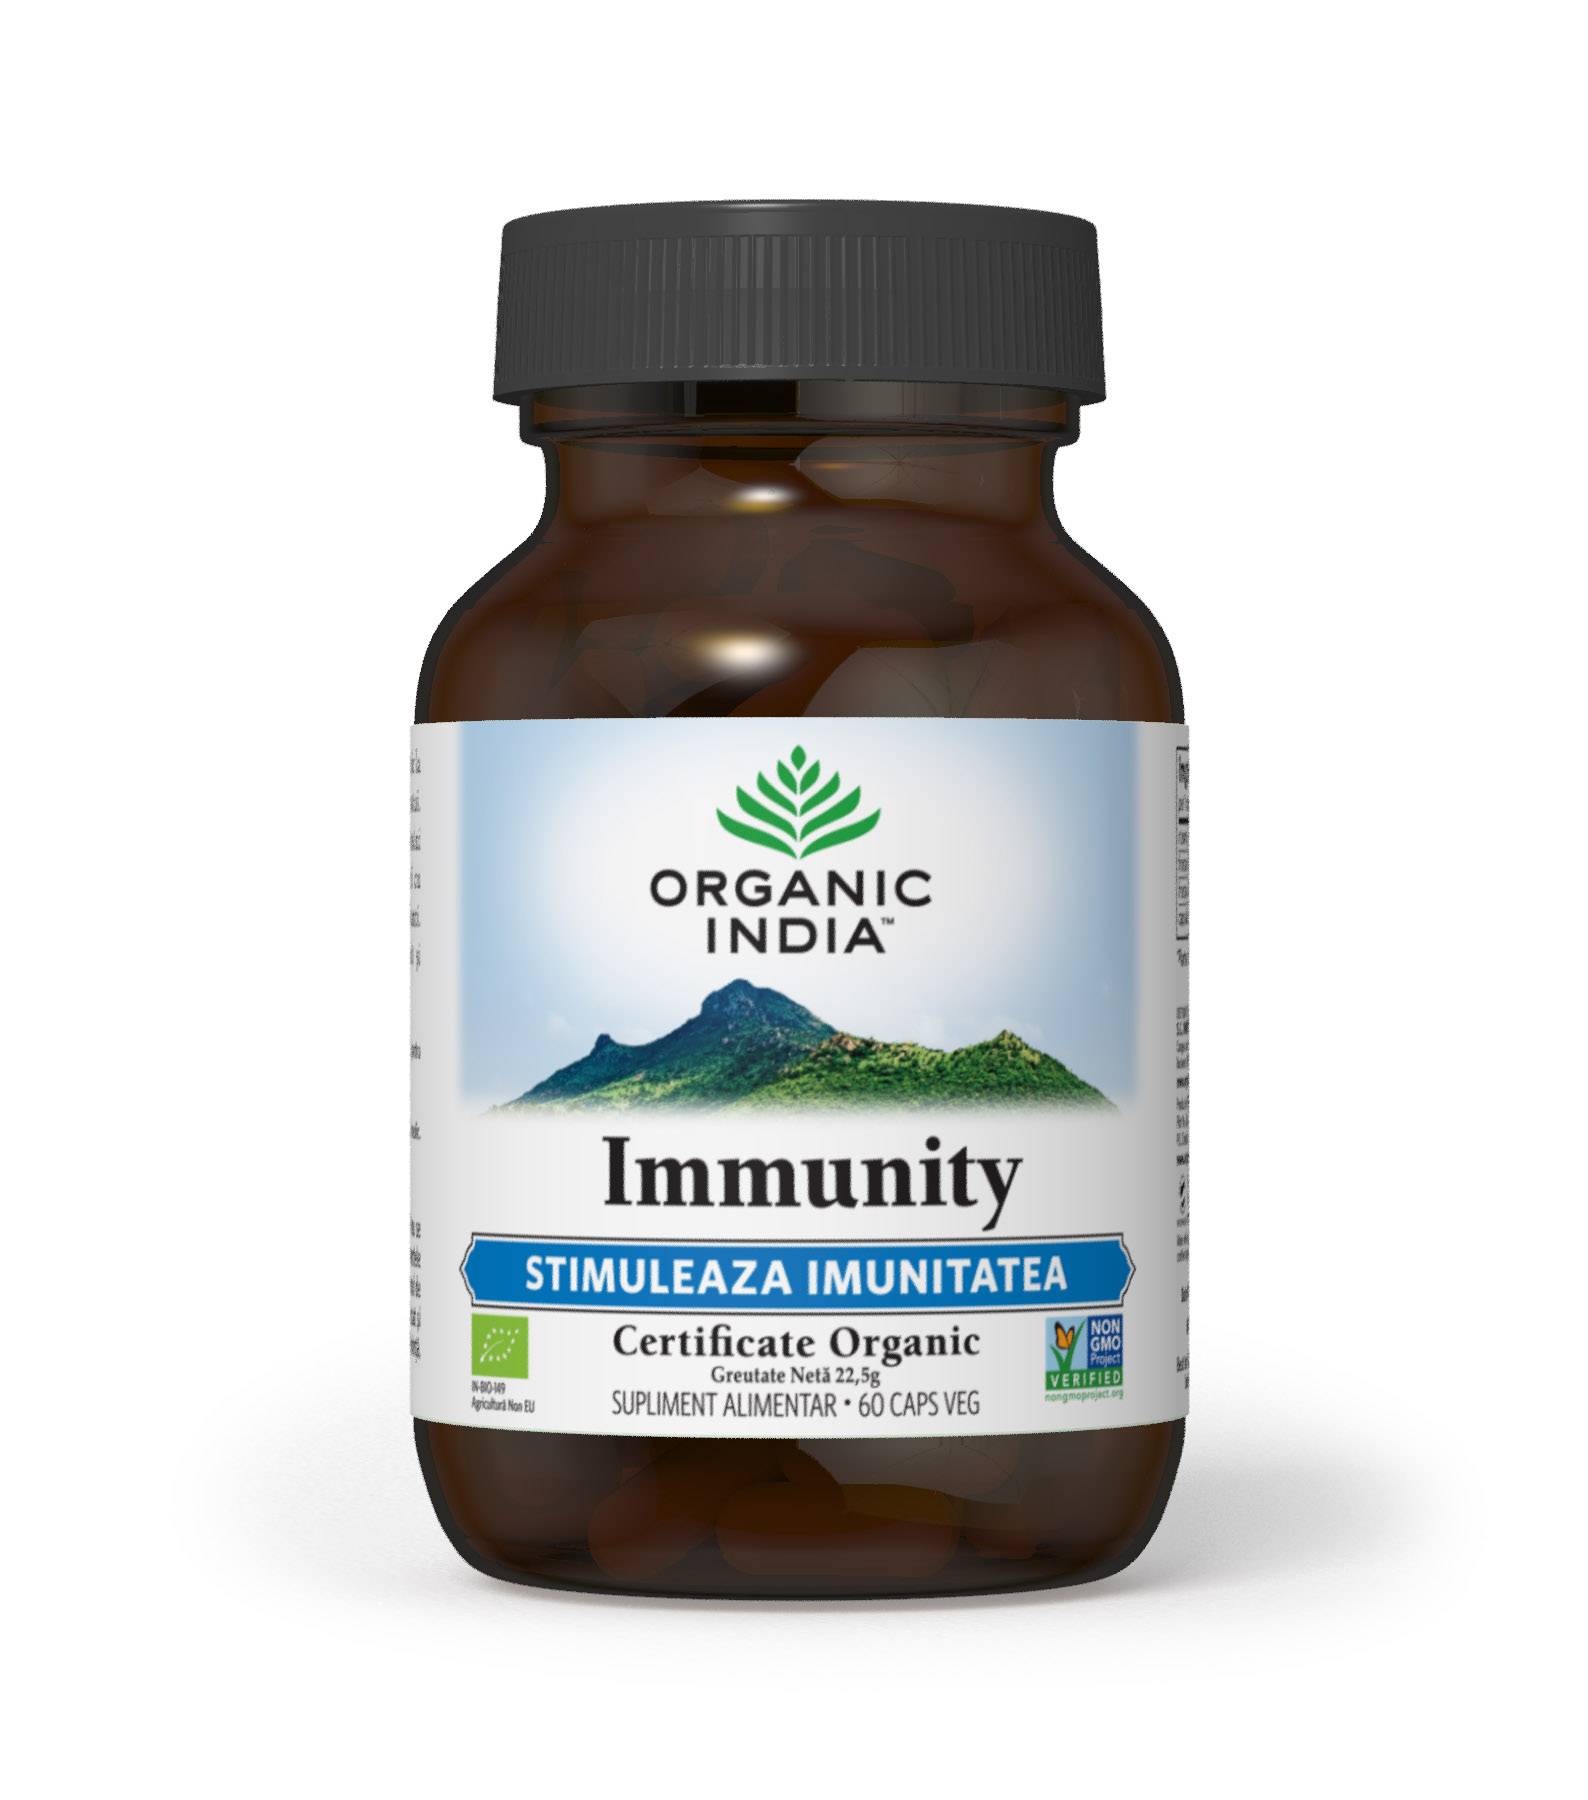 Immunity 60cps veg - organic india